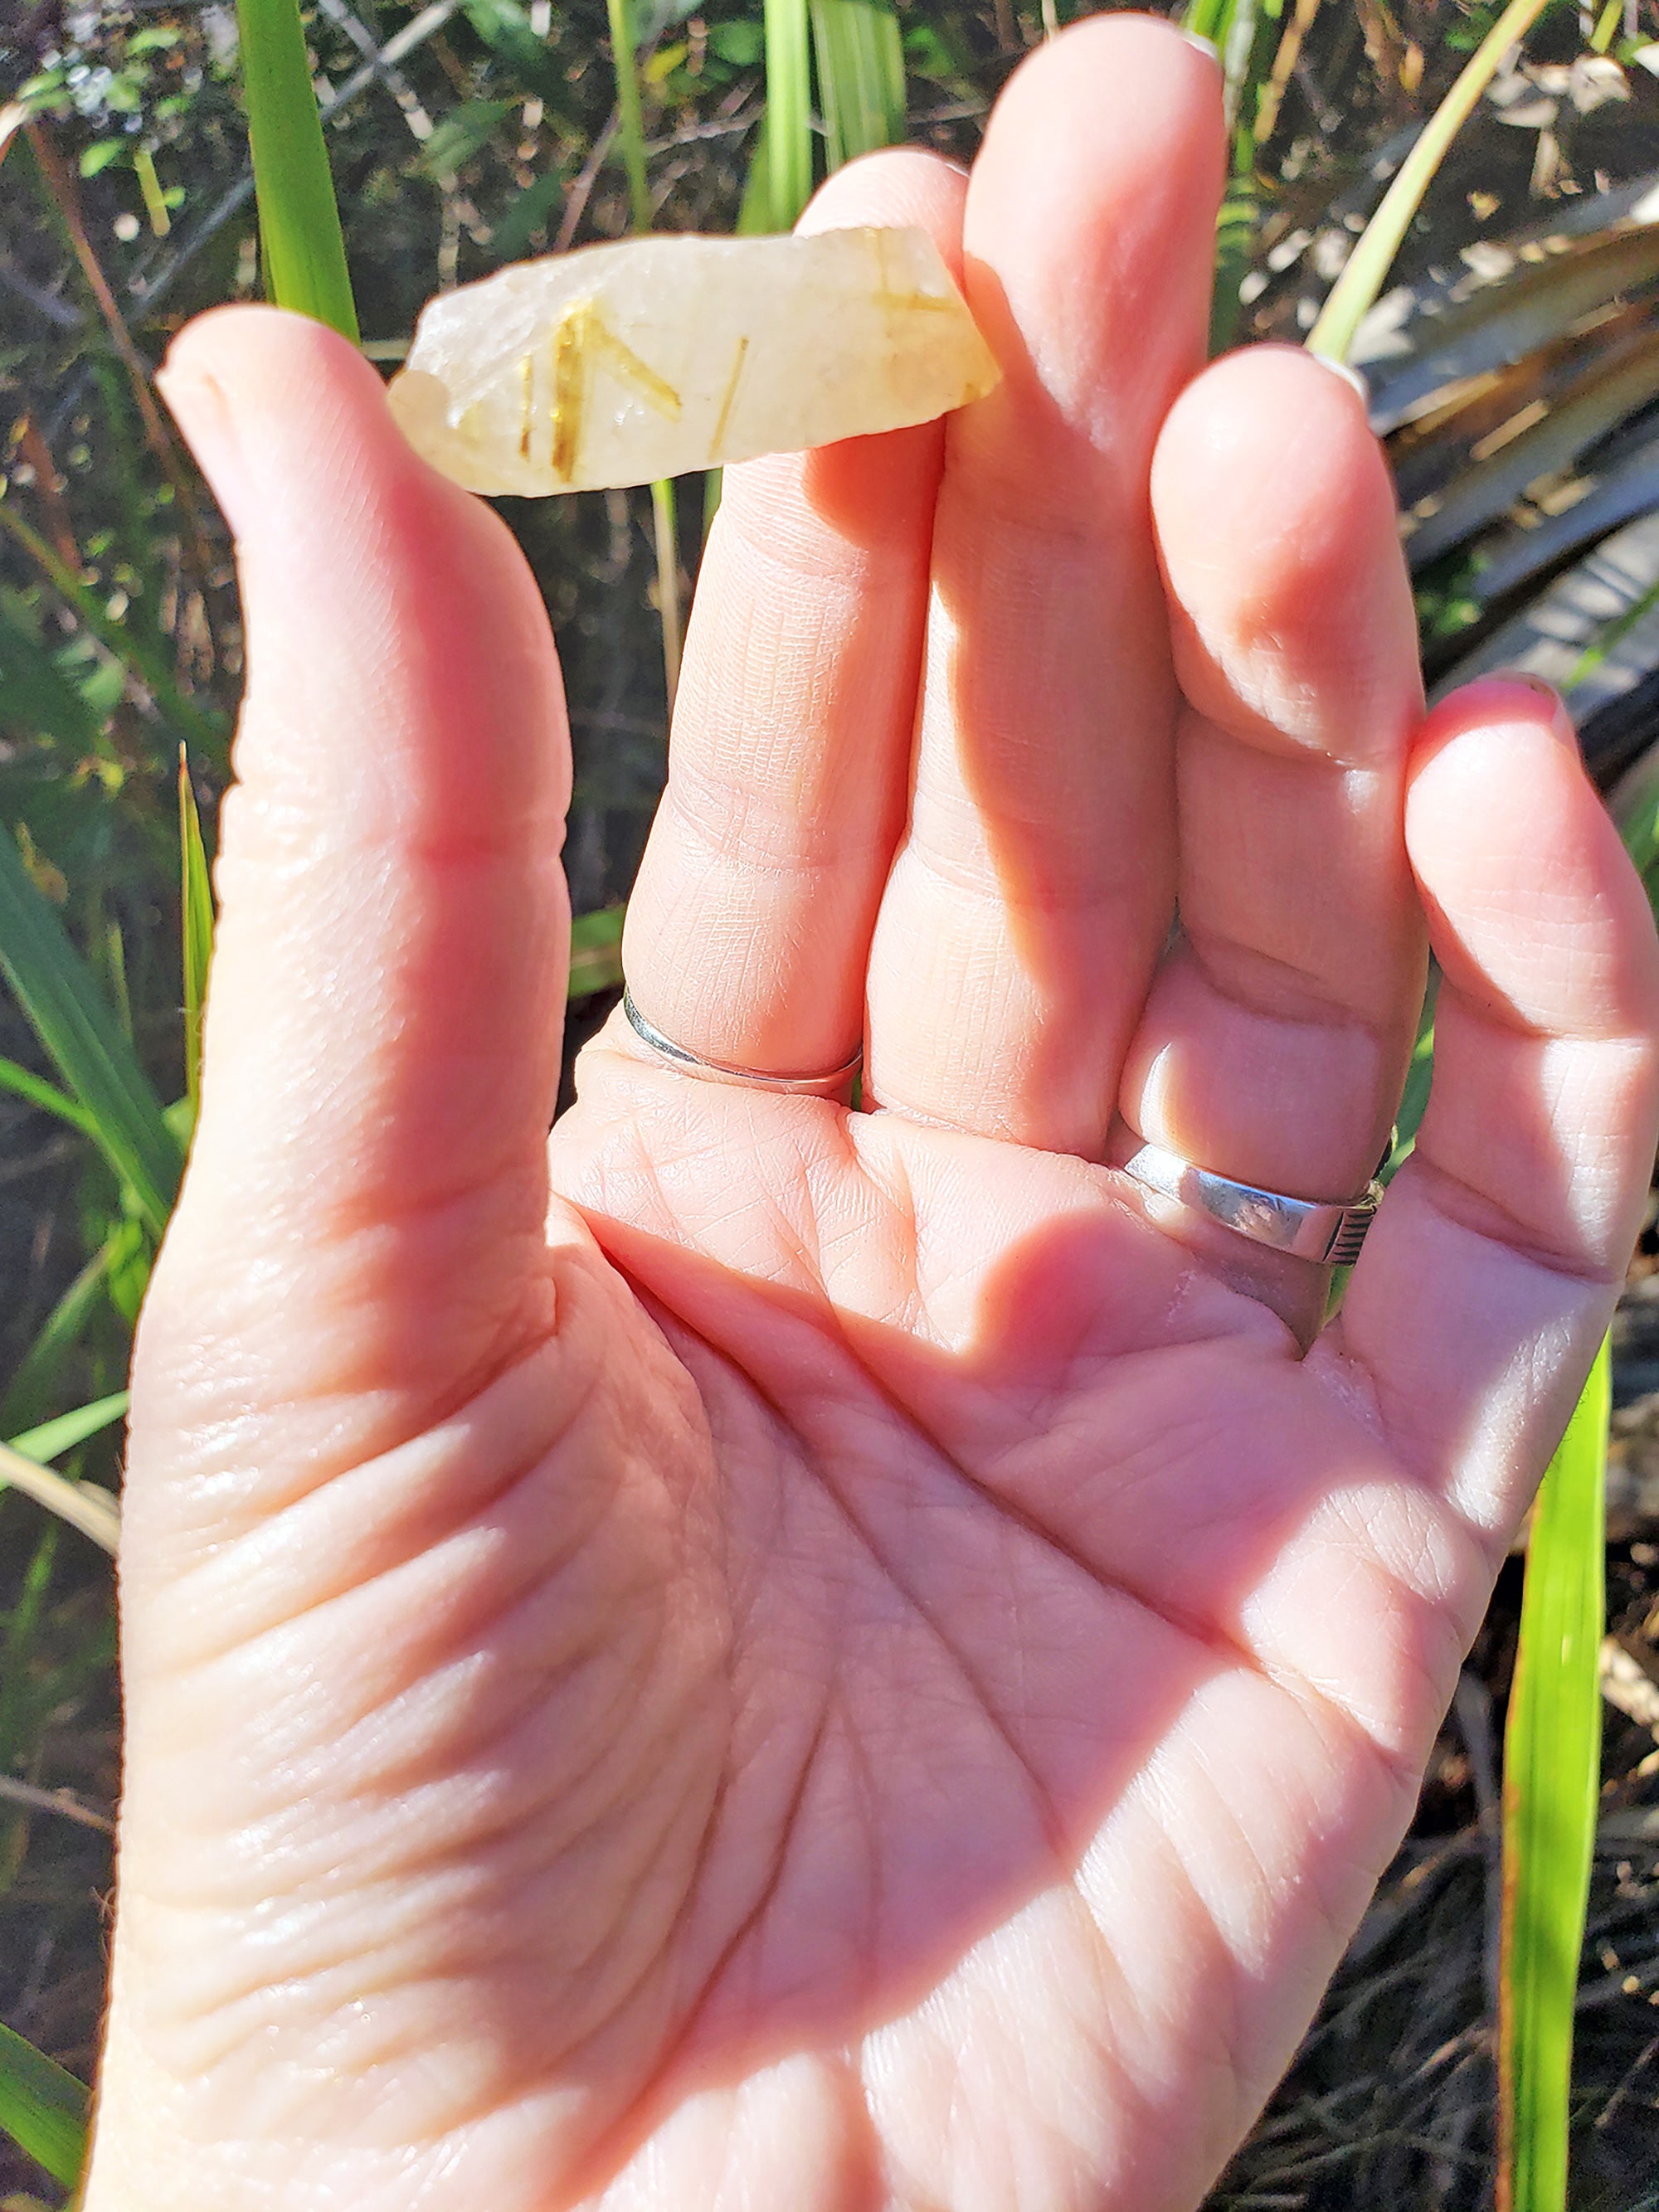 Gold Rutile Quartz Stone in hand